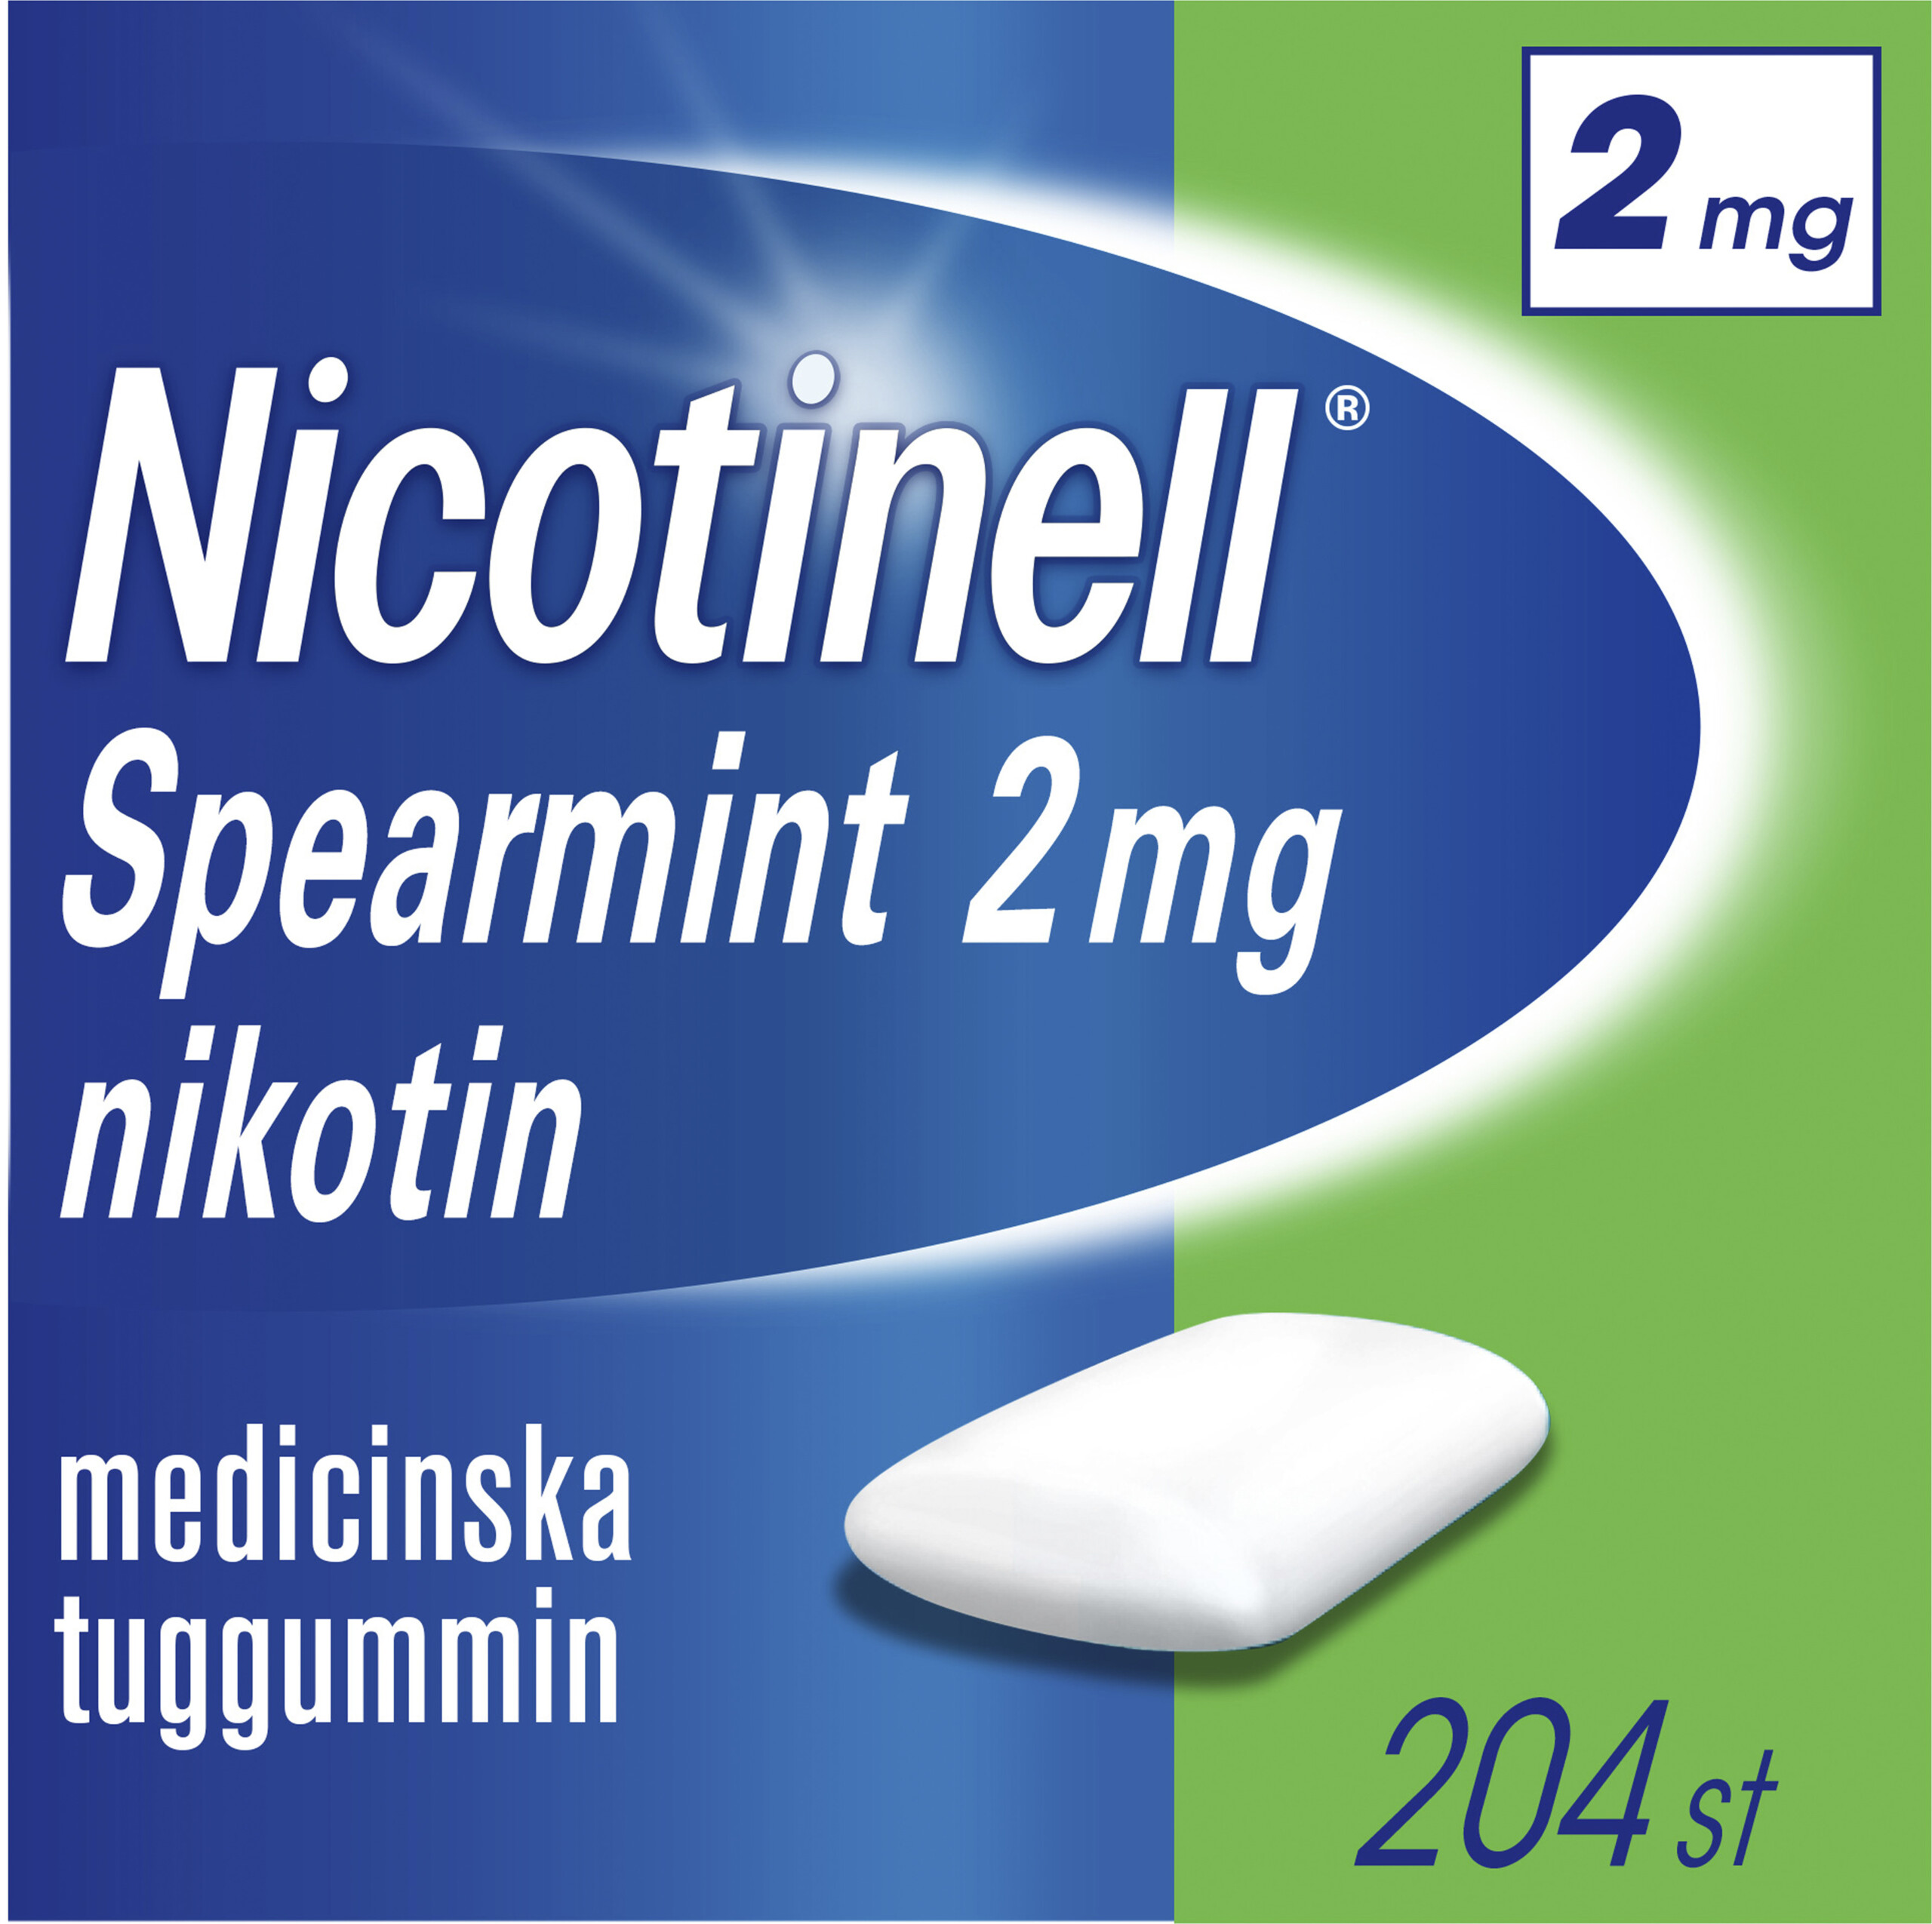 Nicotinell Spearmint Medicinskt tuggummi 2mg Blister, 204tuggummin